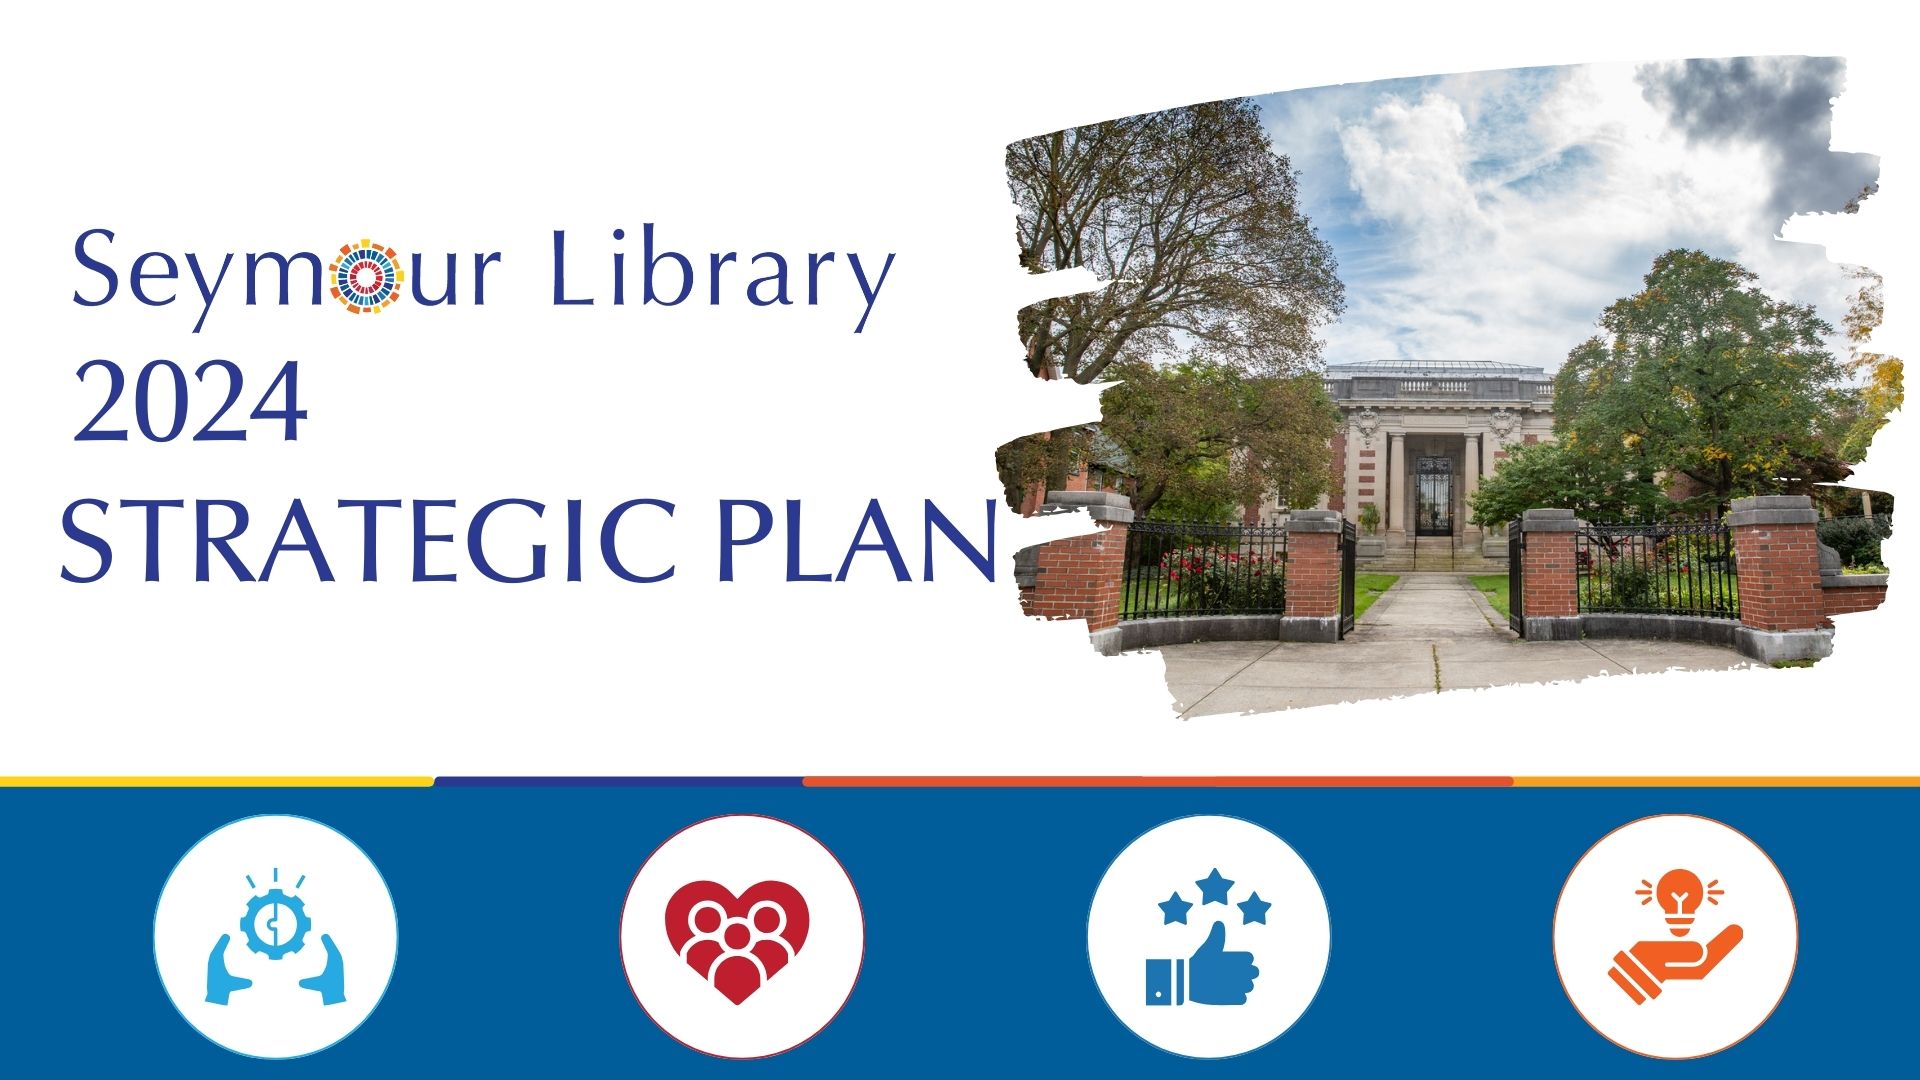 Seymour Library 2024 Strategic Plan